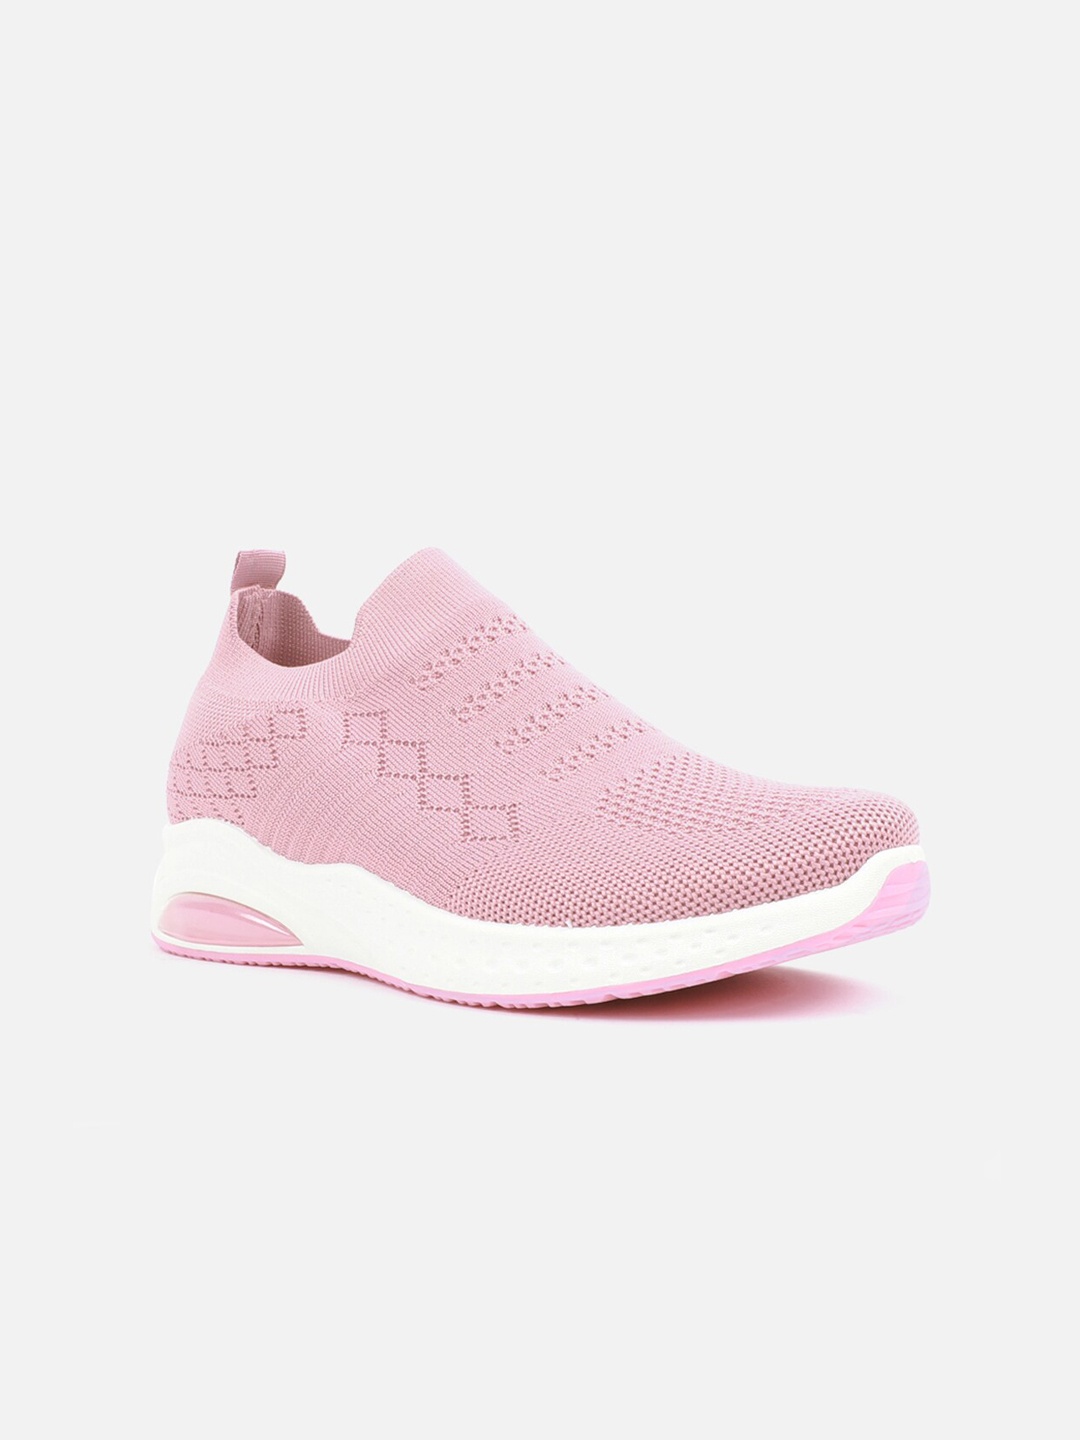 

Carlton London Women Pink Woven Design Slip-On Sneakers